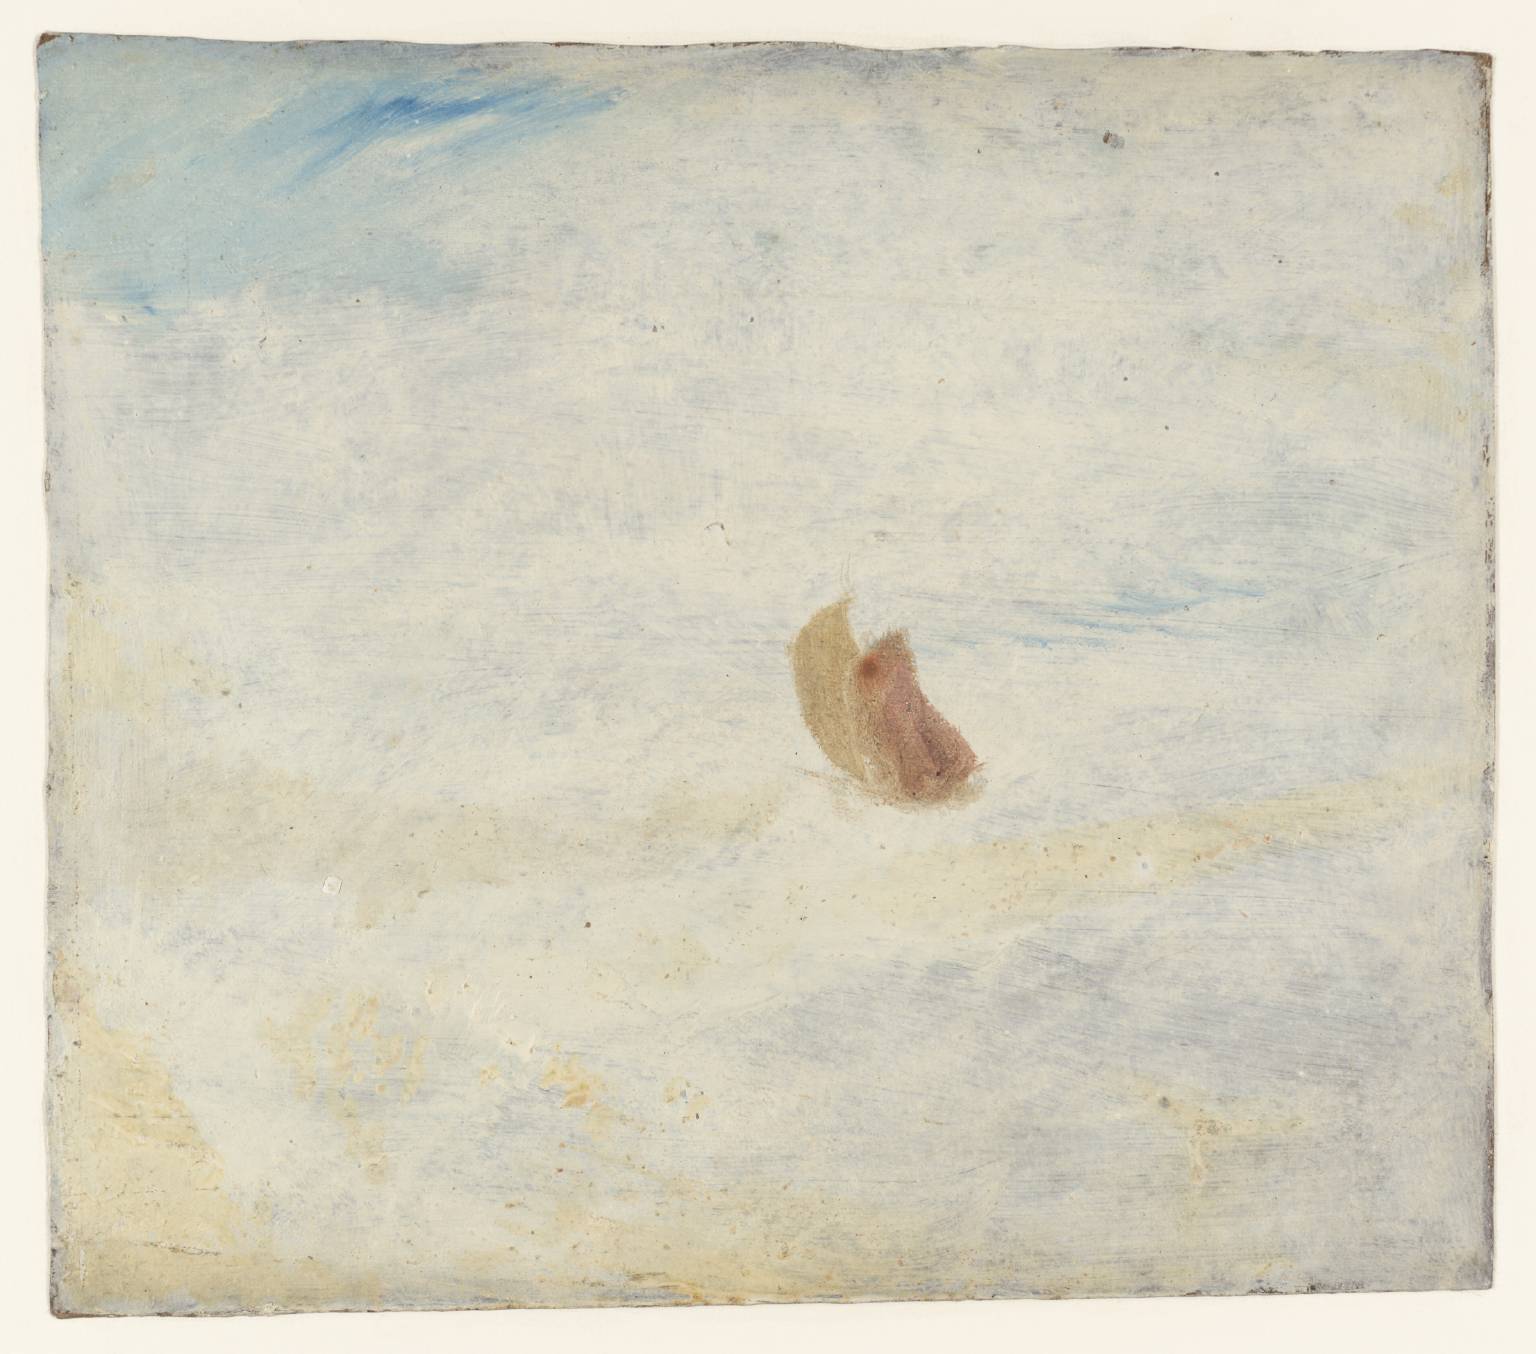 Sailing Boat in a Rough Sea (1845).